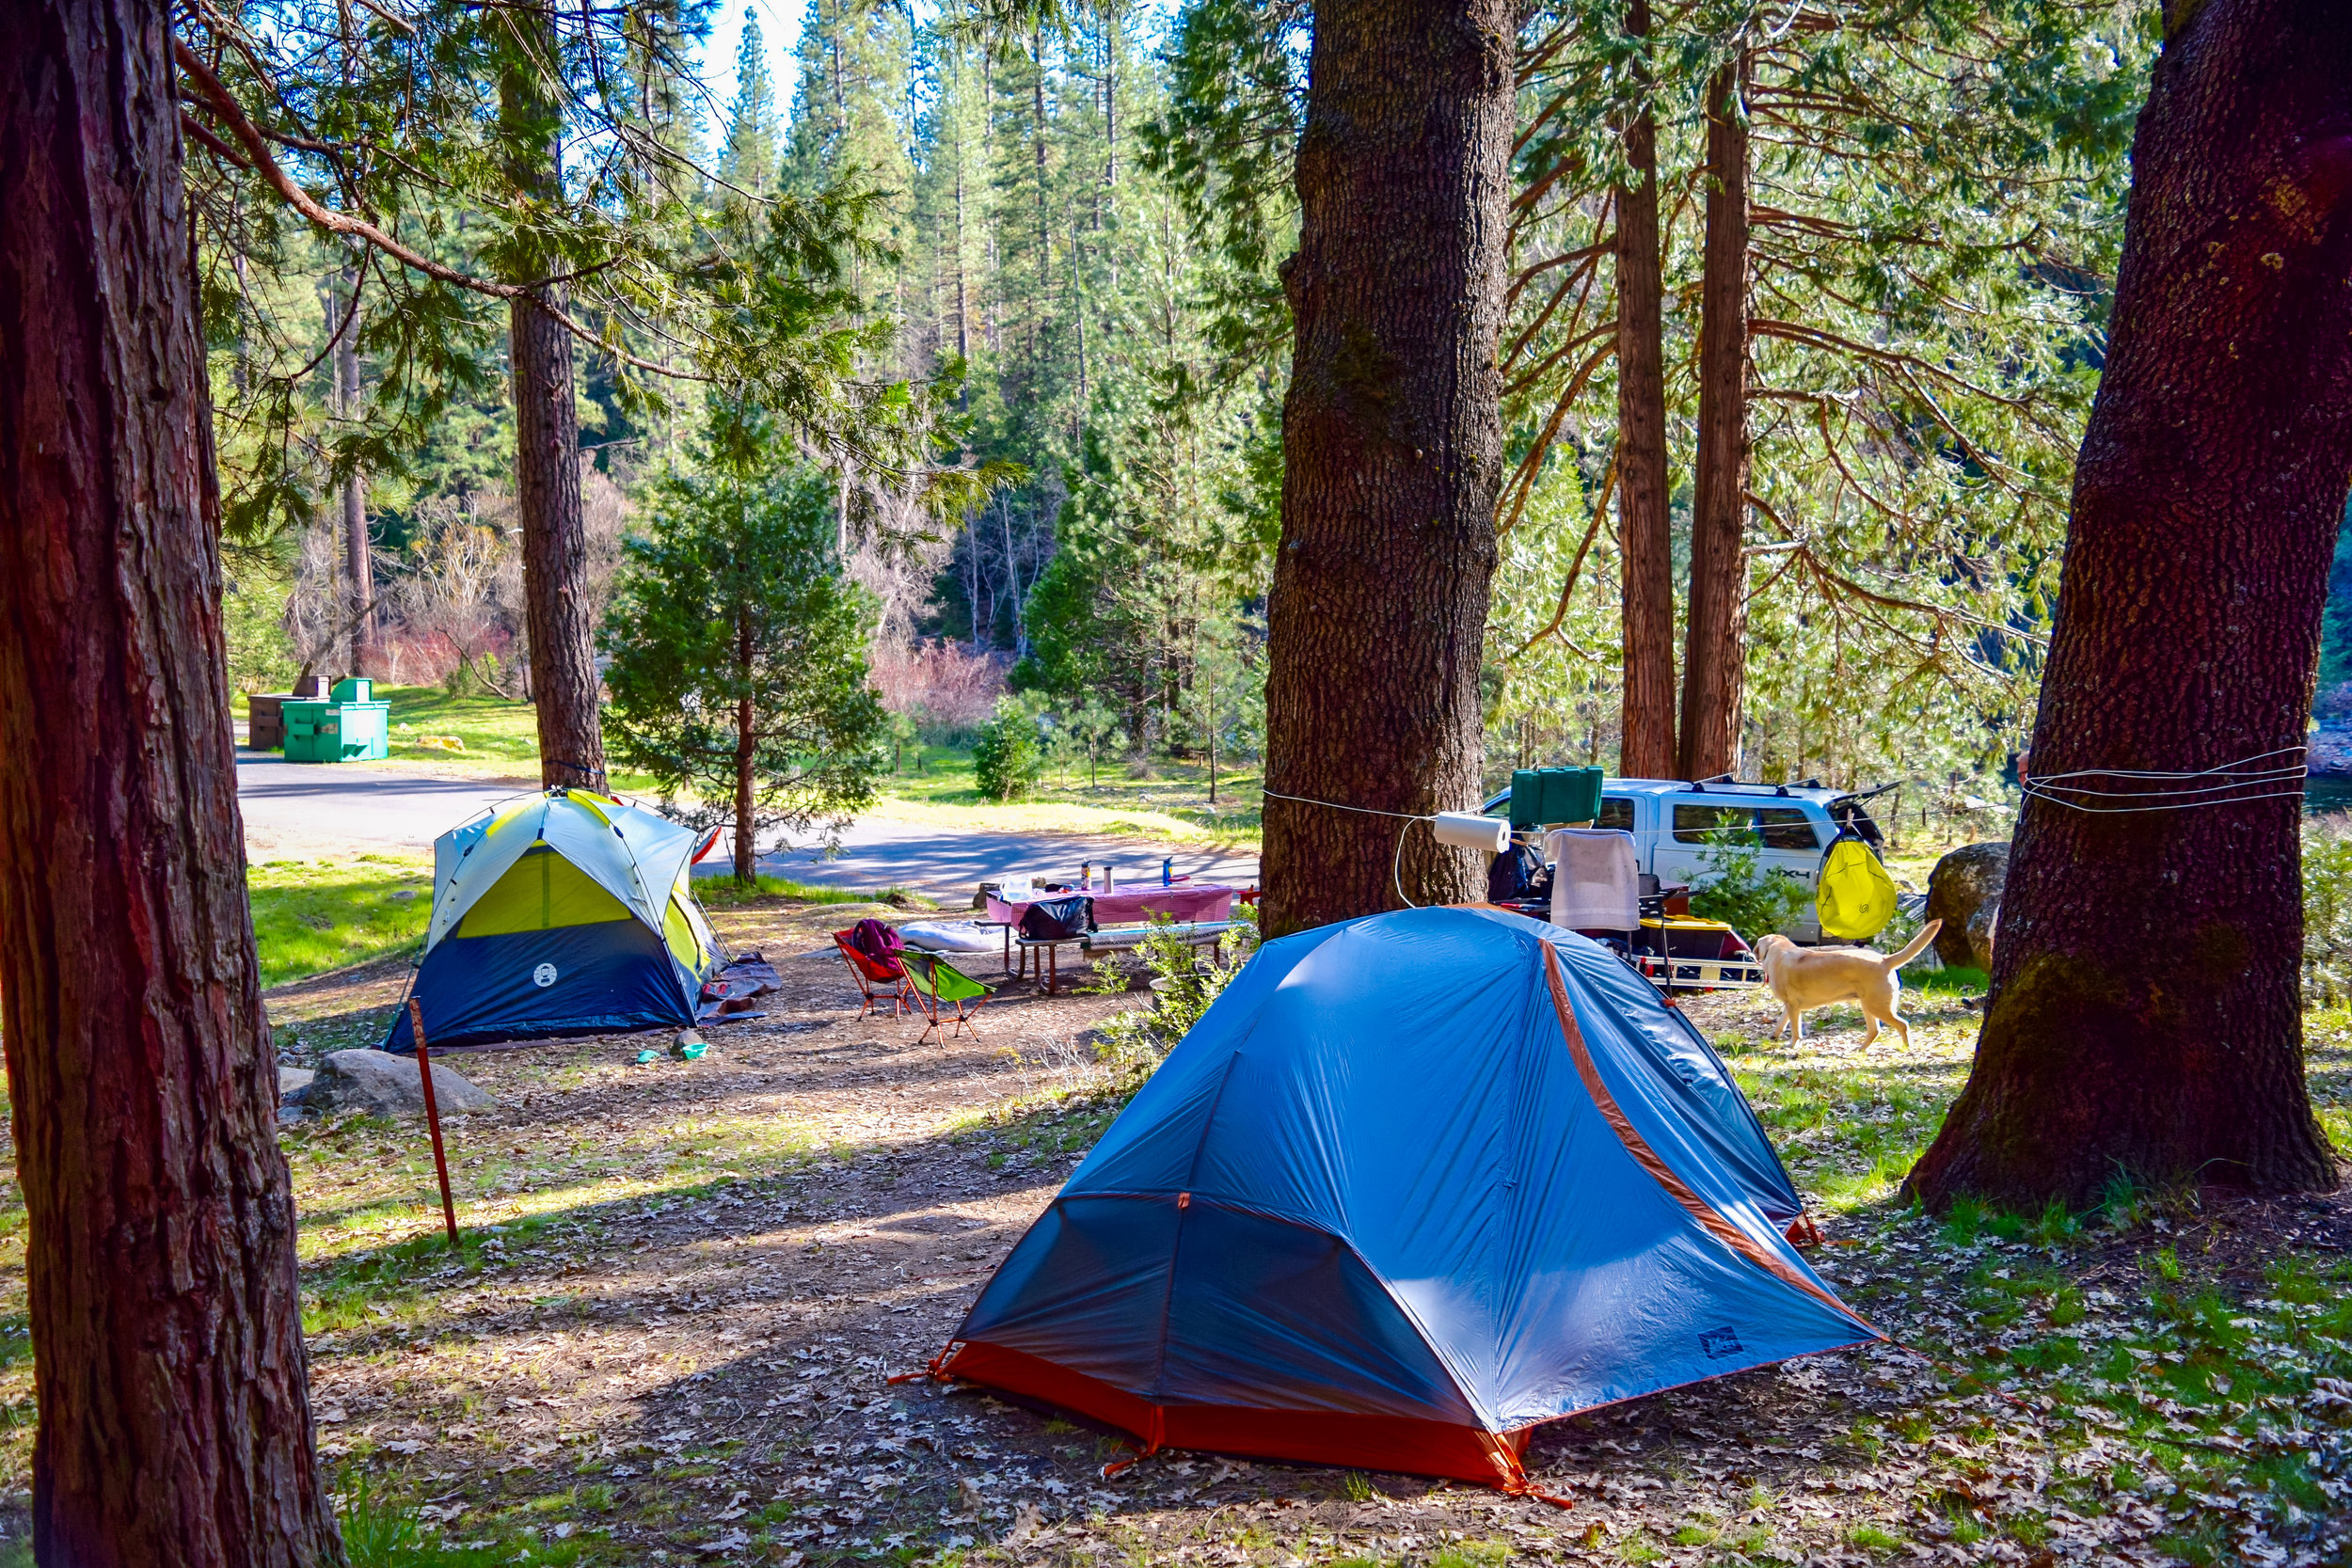 Yosemite National Park camping sites